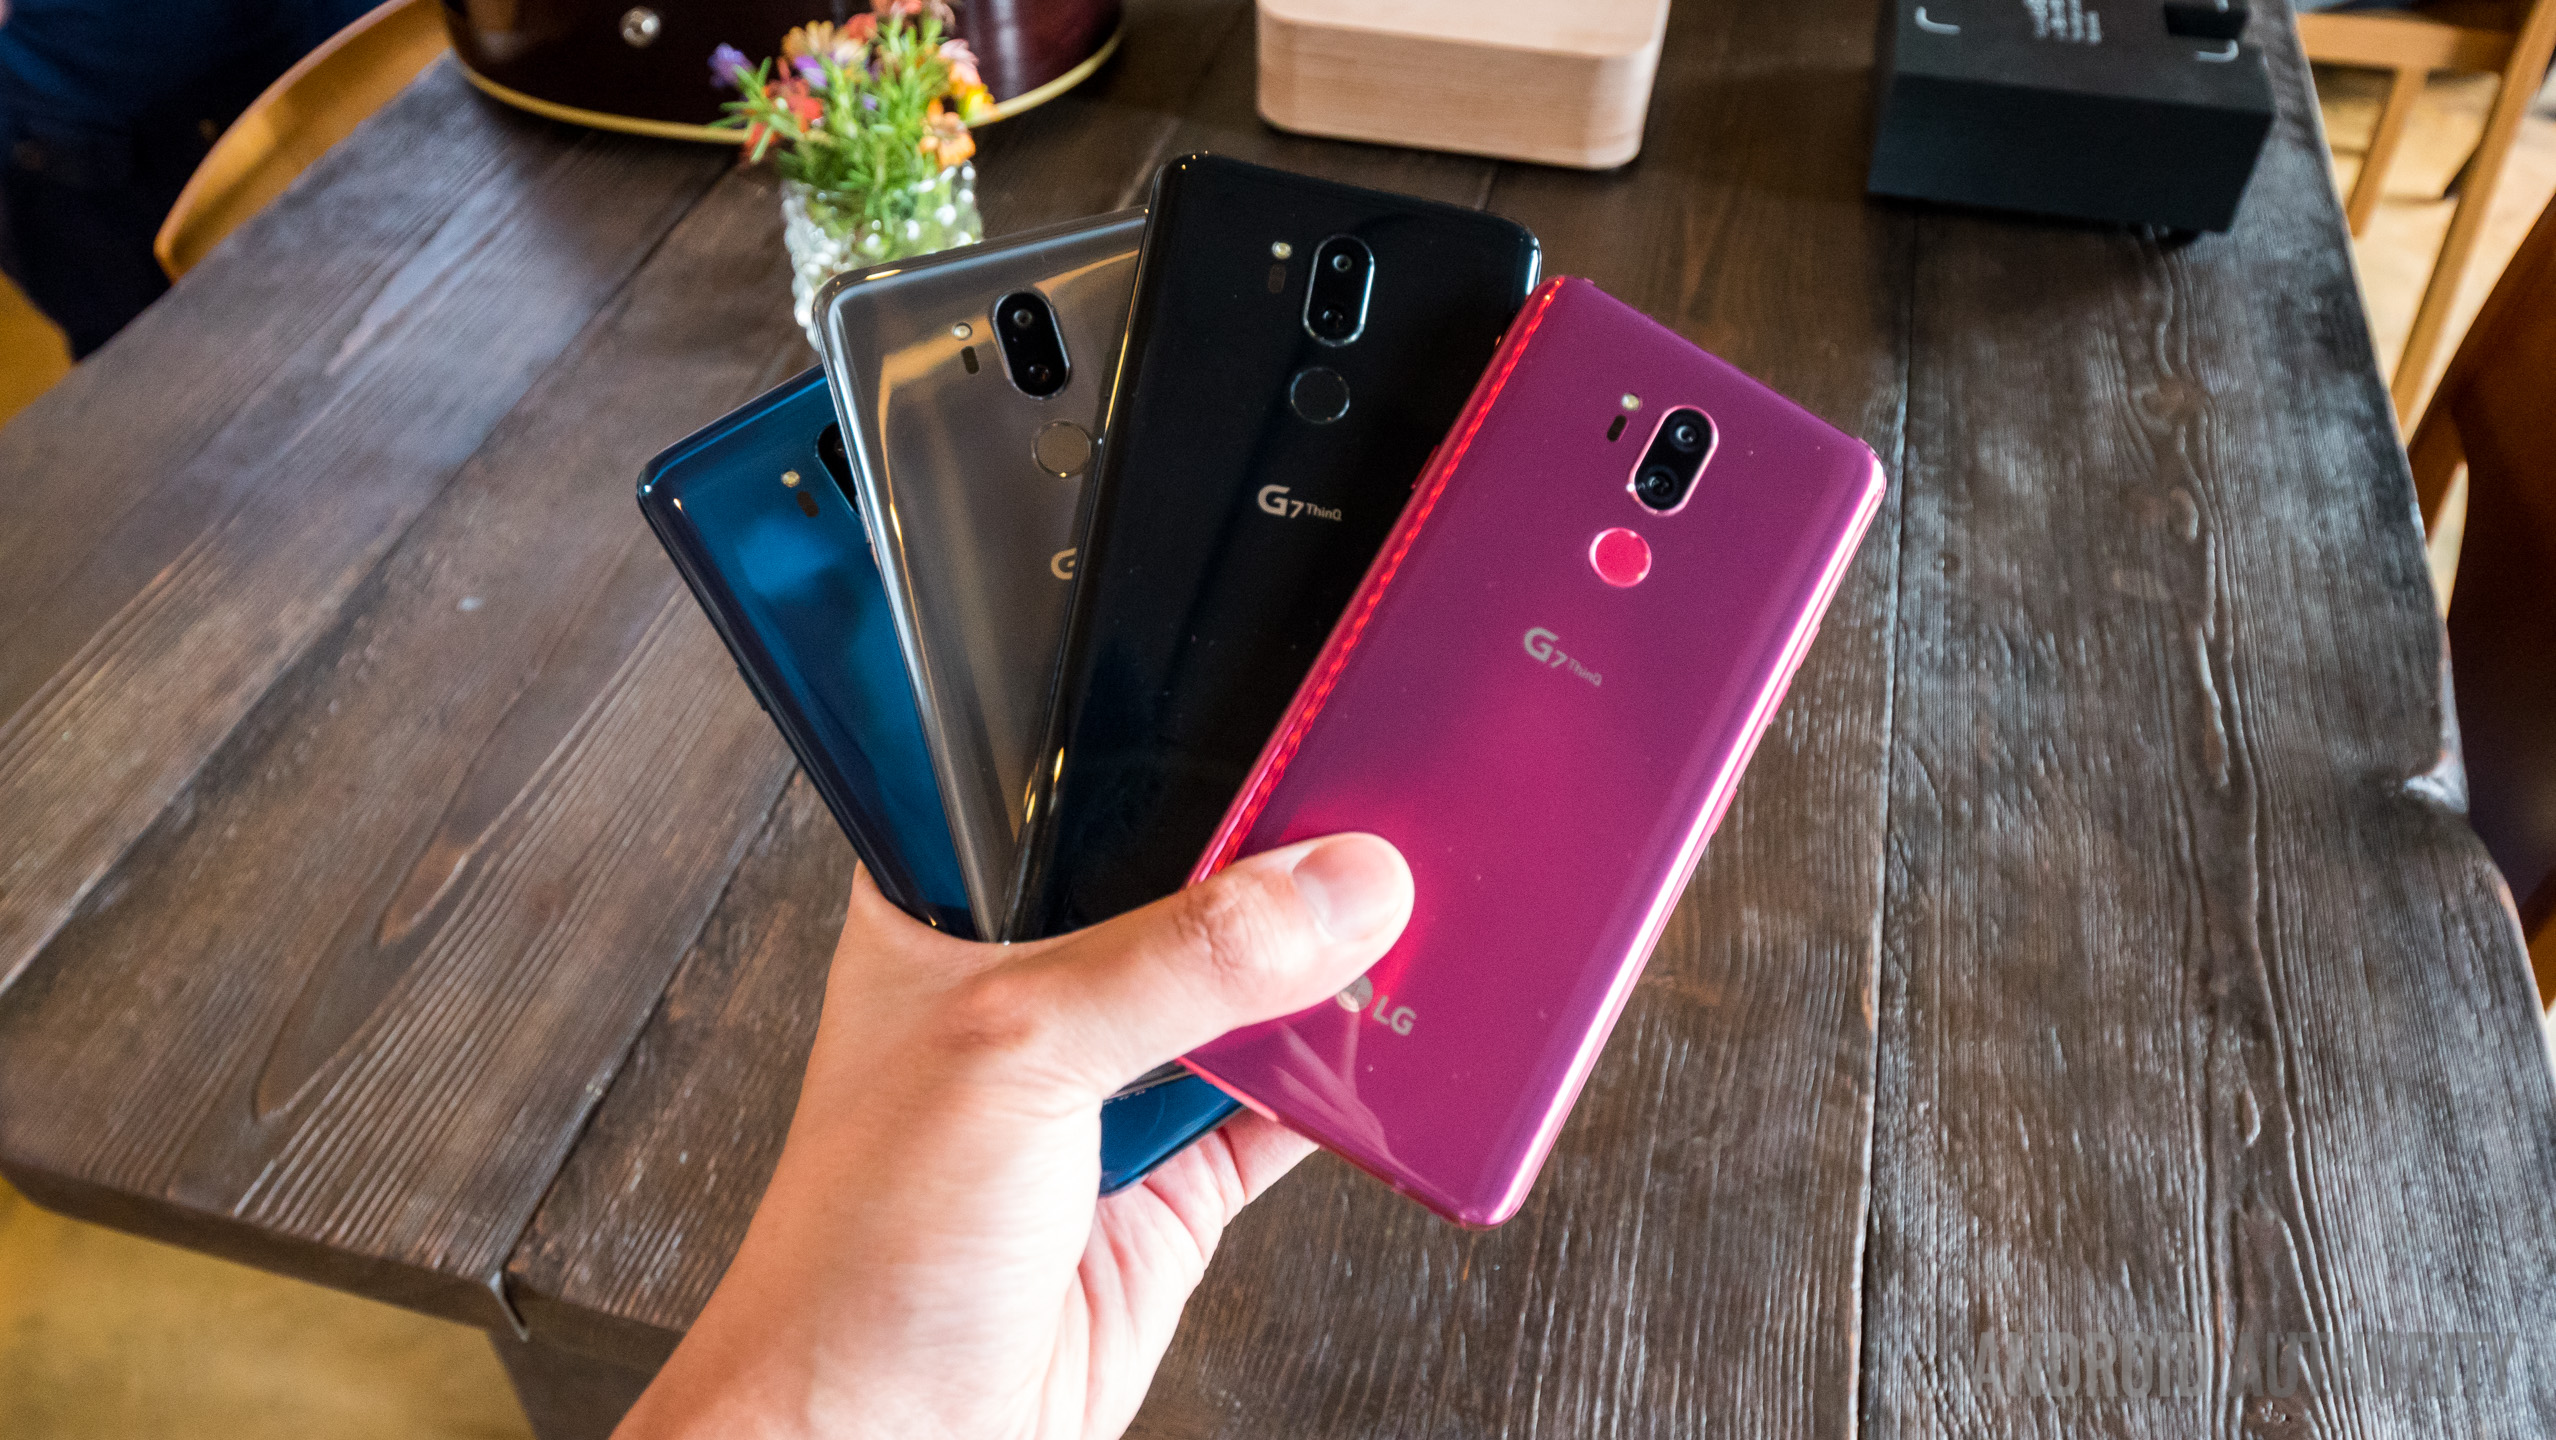 LG G7 ThinQ color variants